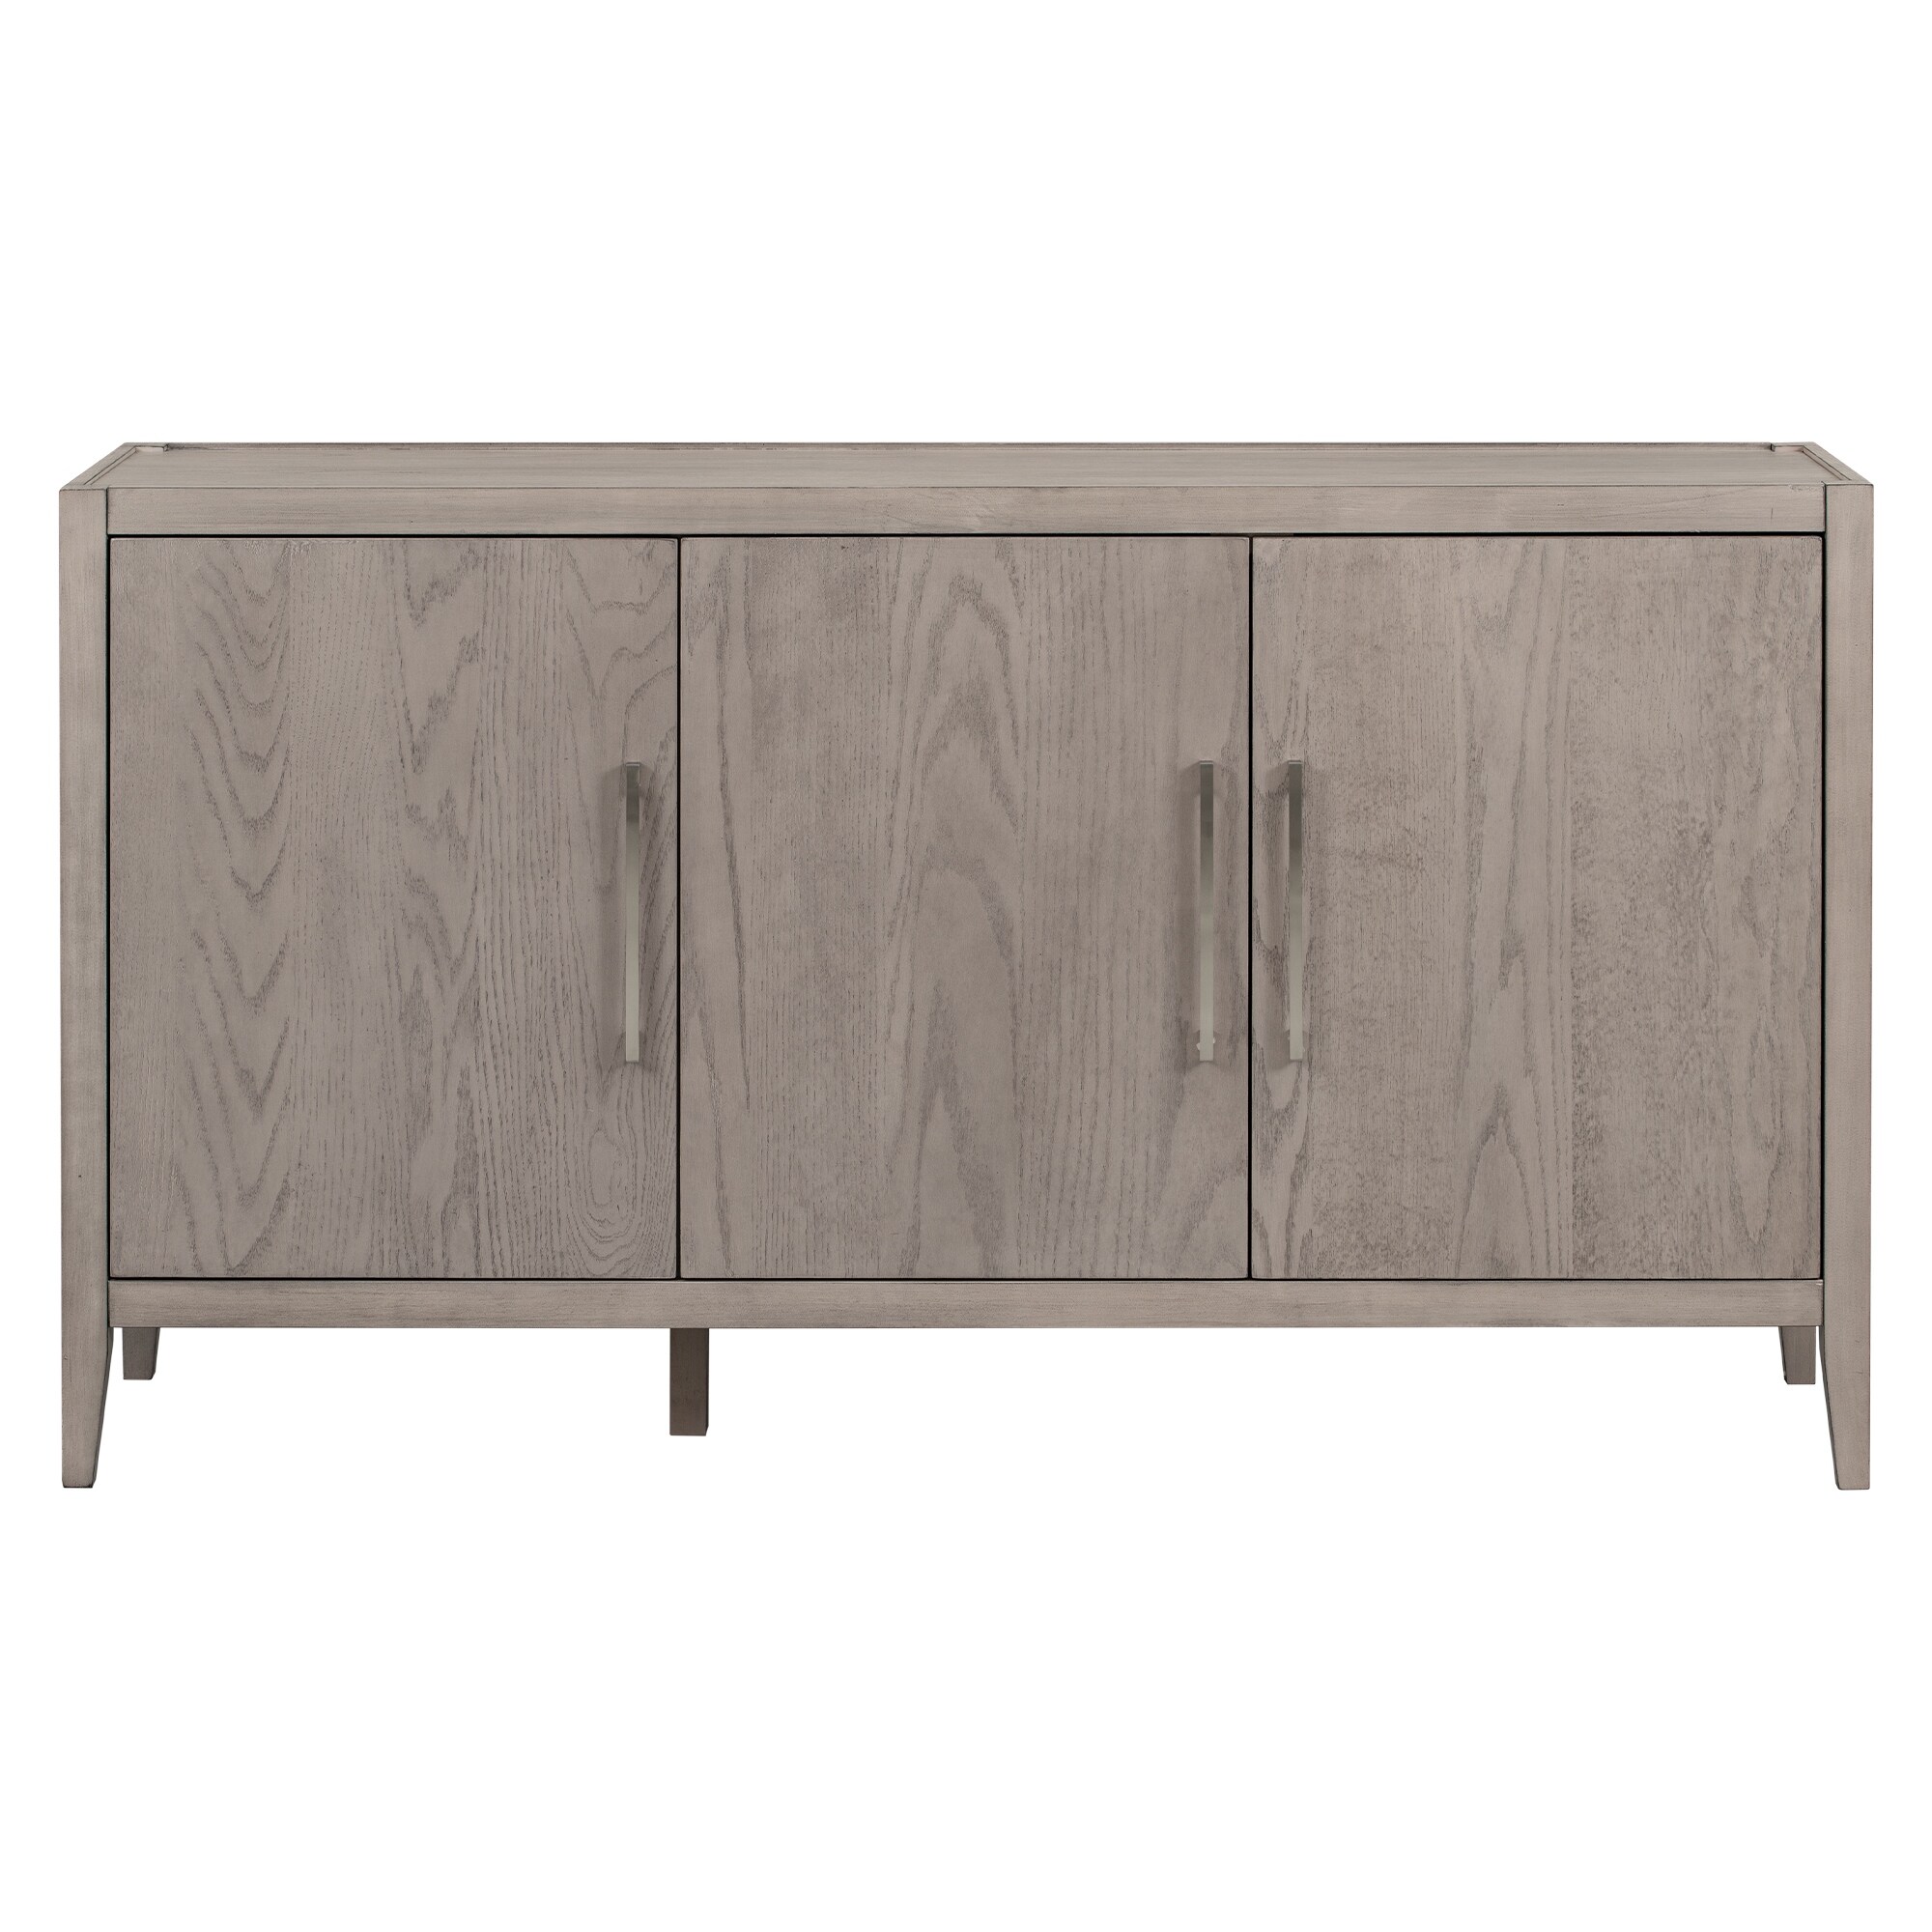 Wooden Storage Cabinet Sideboard with 3 Doors and Adjustable Shelf - Light Oak